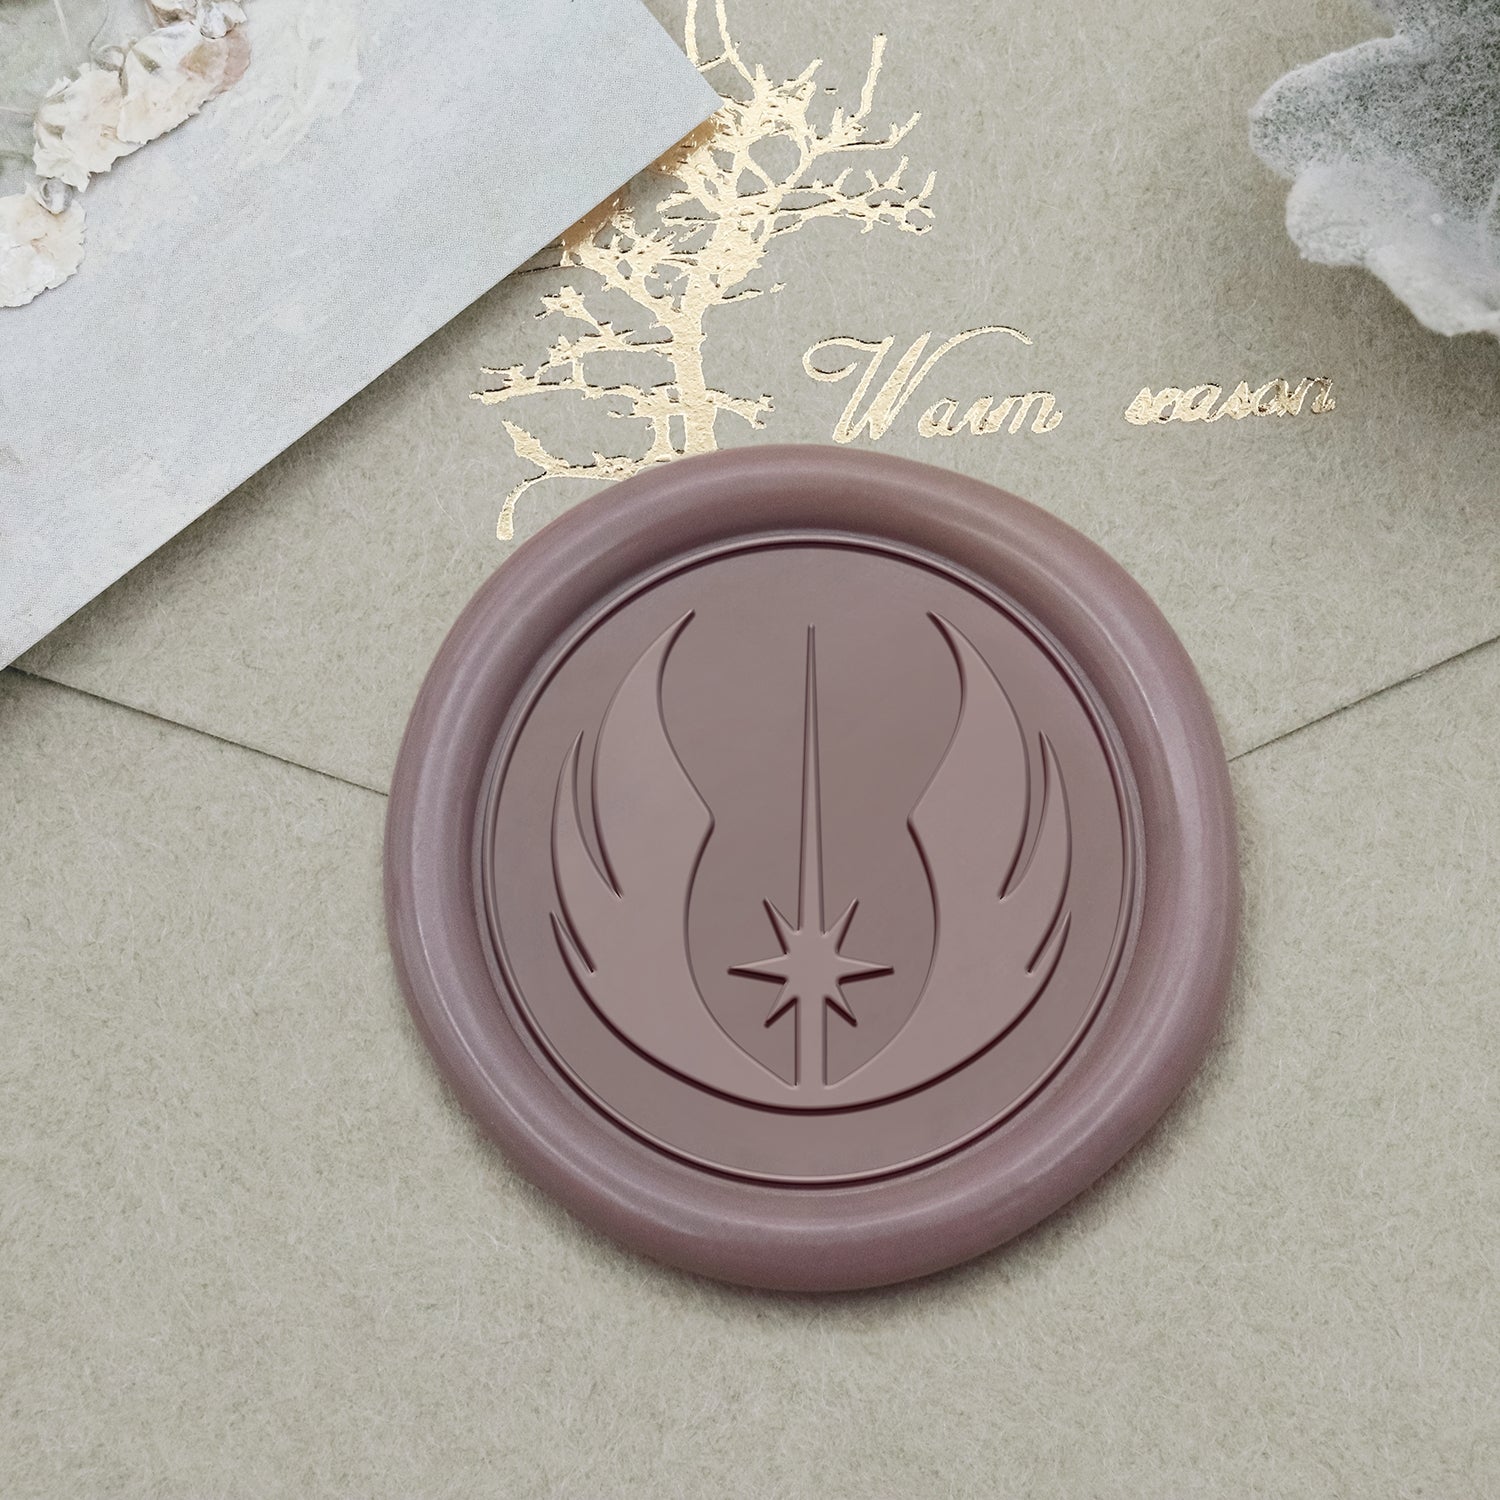 Stamprints Jedi Order Design Wax Seal Stamp 1